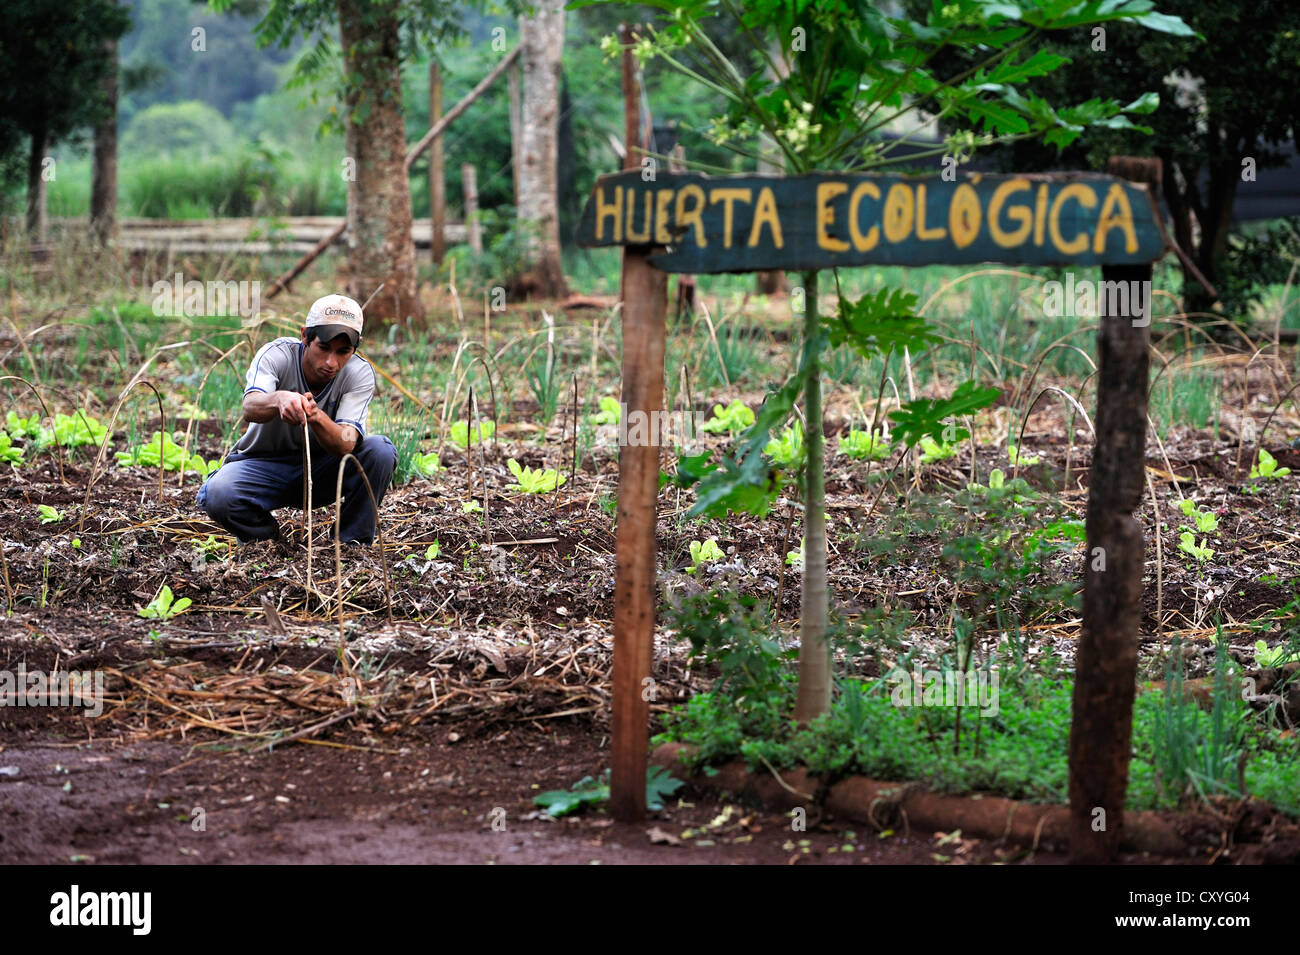 Ökologischer Landbau, jungen Mann, Kopfsalat, Schild mit der Aufschrift "Huerta Ecologica', ökologischer Gemüsegarten anpflanzen Stockfoto